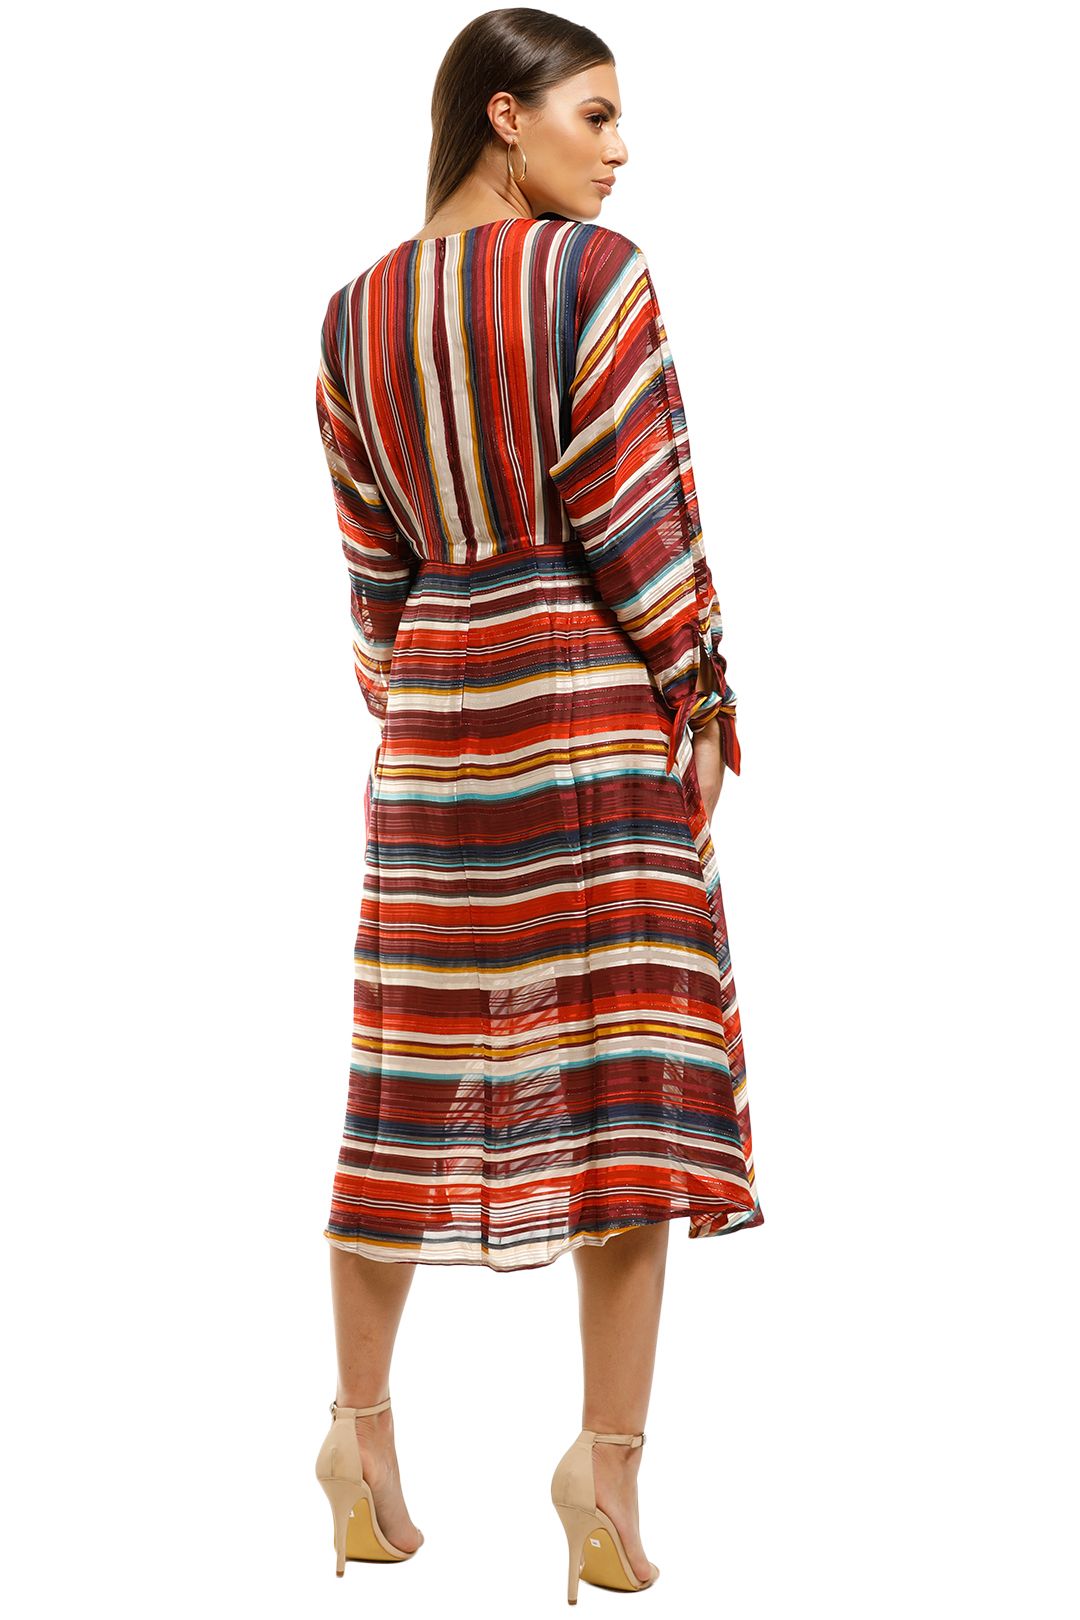 Elliatt-Edie-Dress-Multi-Stripes-Back